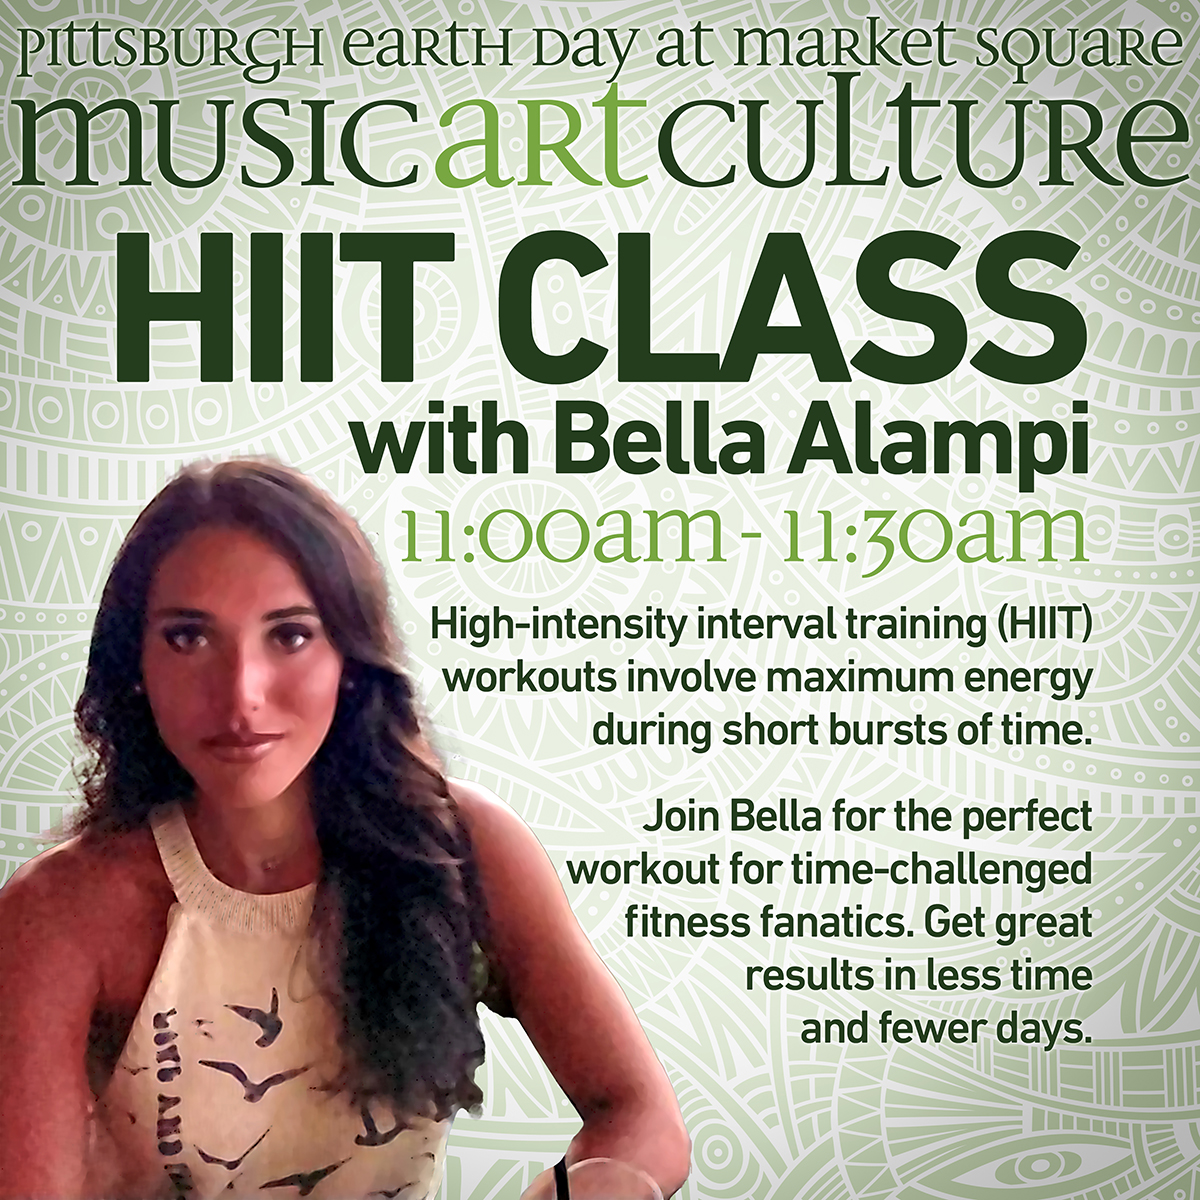 Bella Alampi, Bella HIIT - Pittsburgh Earth Day Music Art Culture Festival